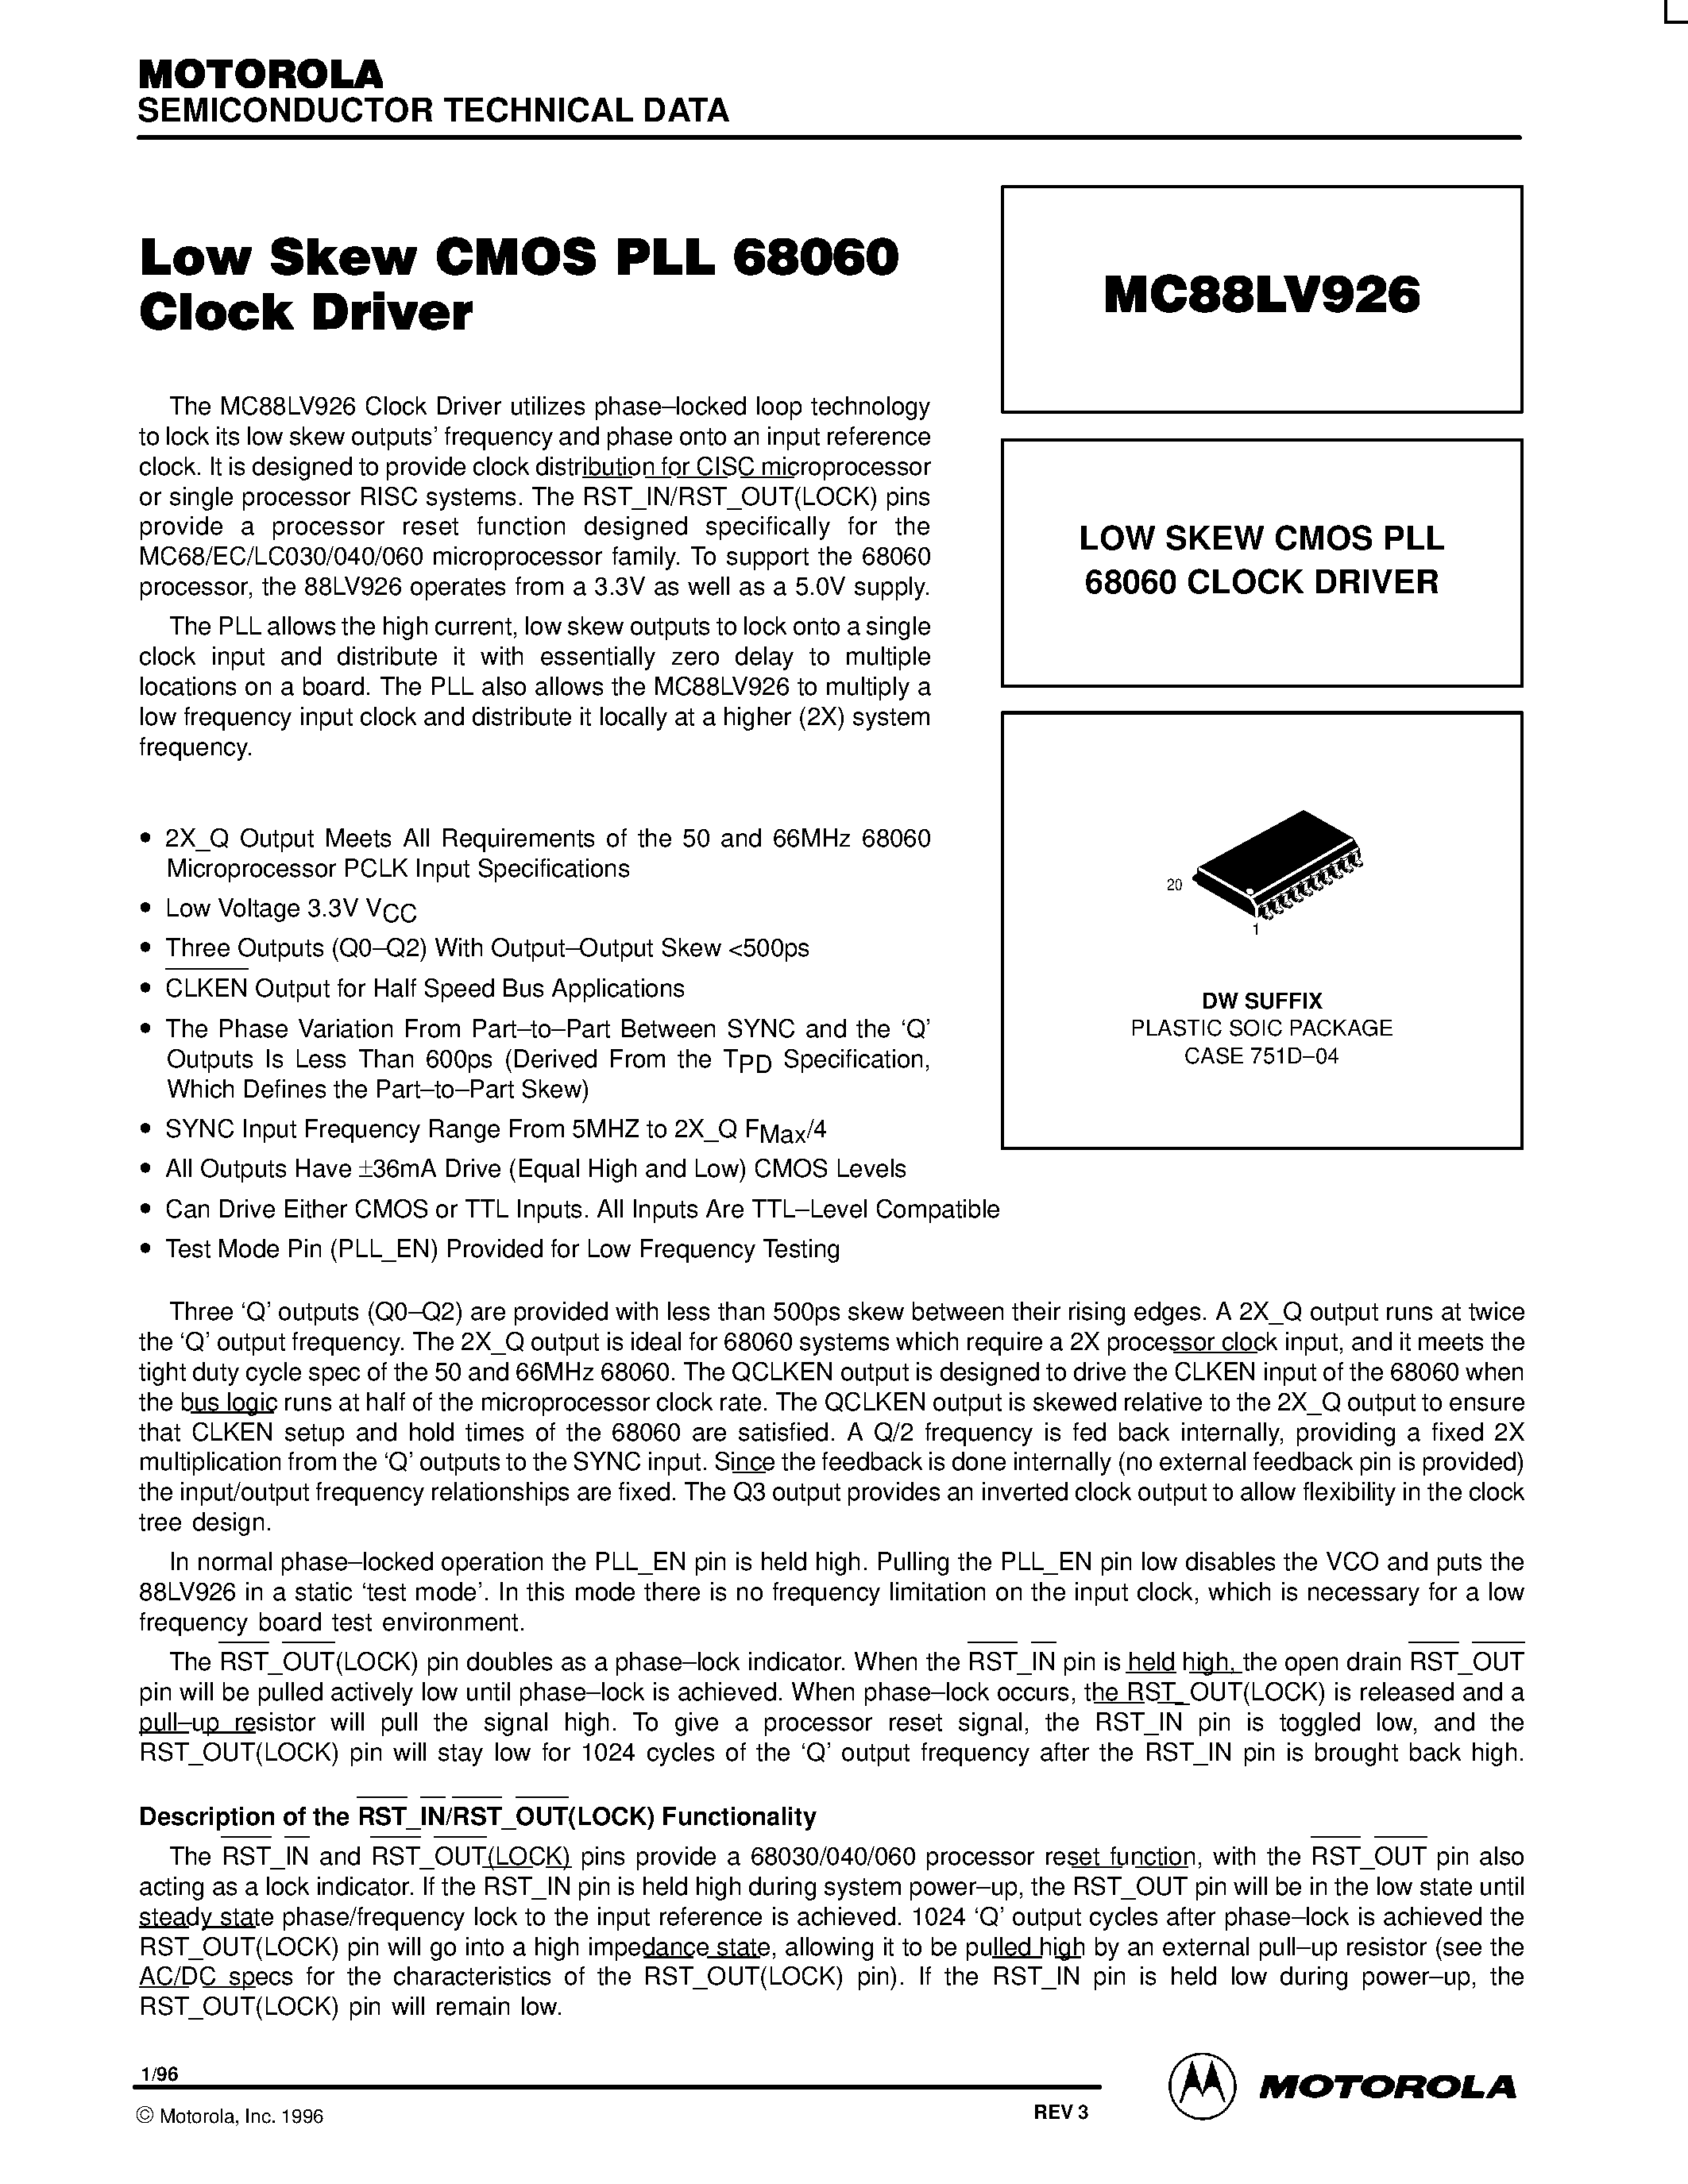 Datasheet MC88LV926 - LOW SKEW CMOS PLL 68060 CLOCK DRIVER page 1